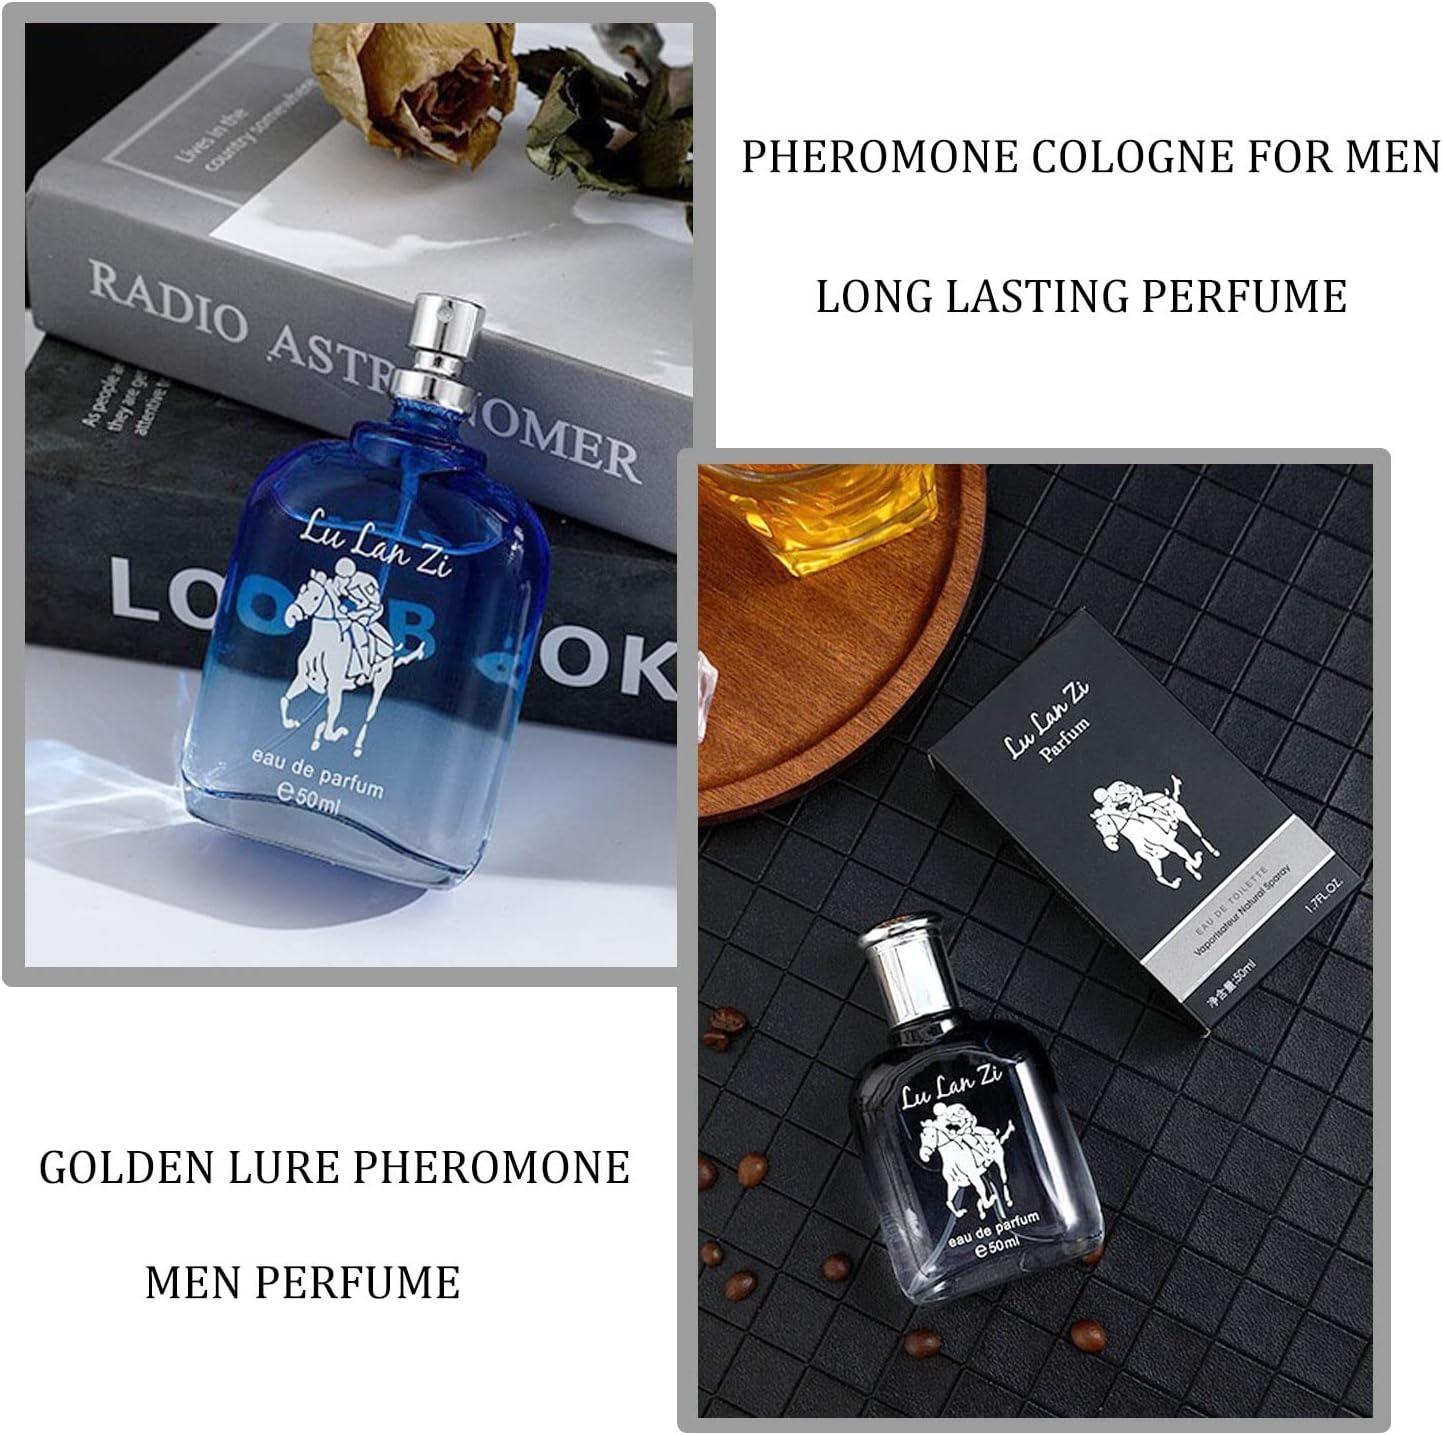 HAGUAN Pheromone Cologne for Men, Golden Lure Pheromone Perfume